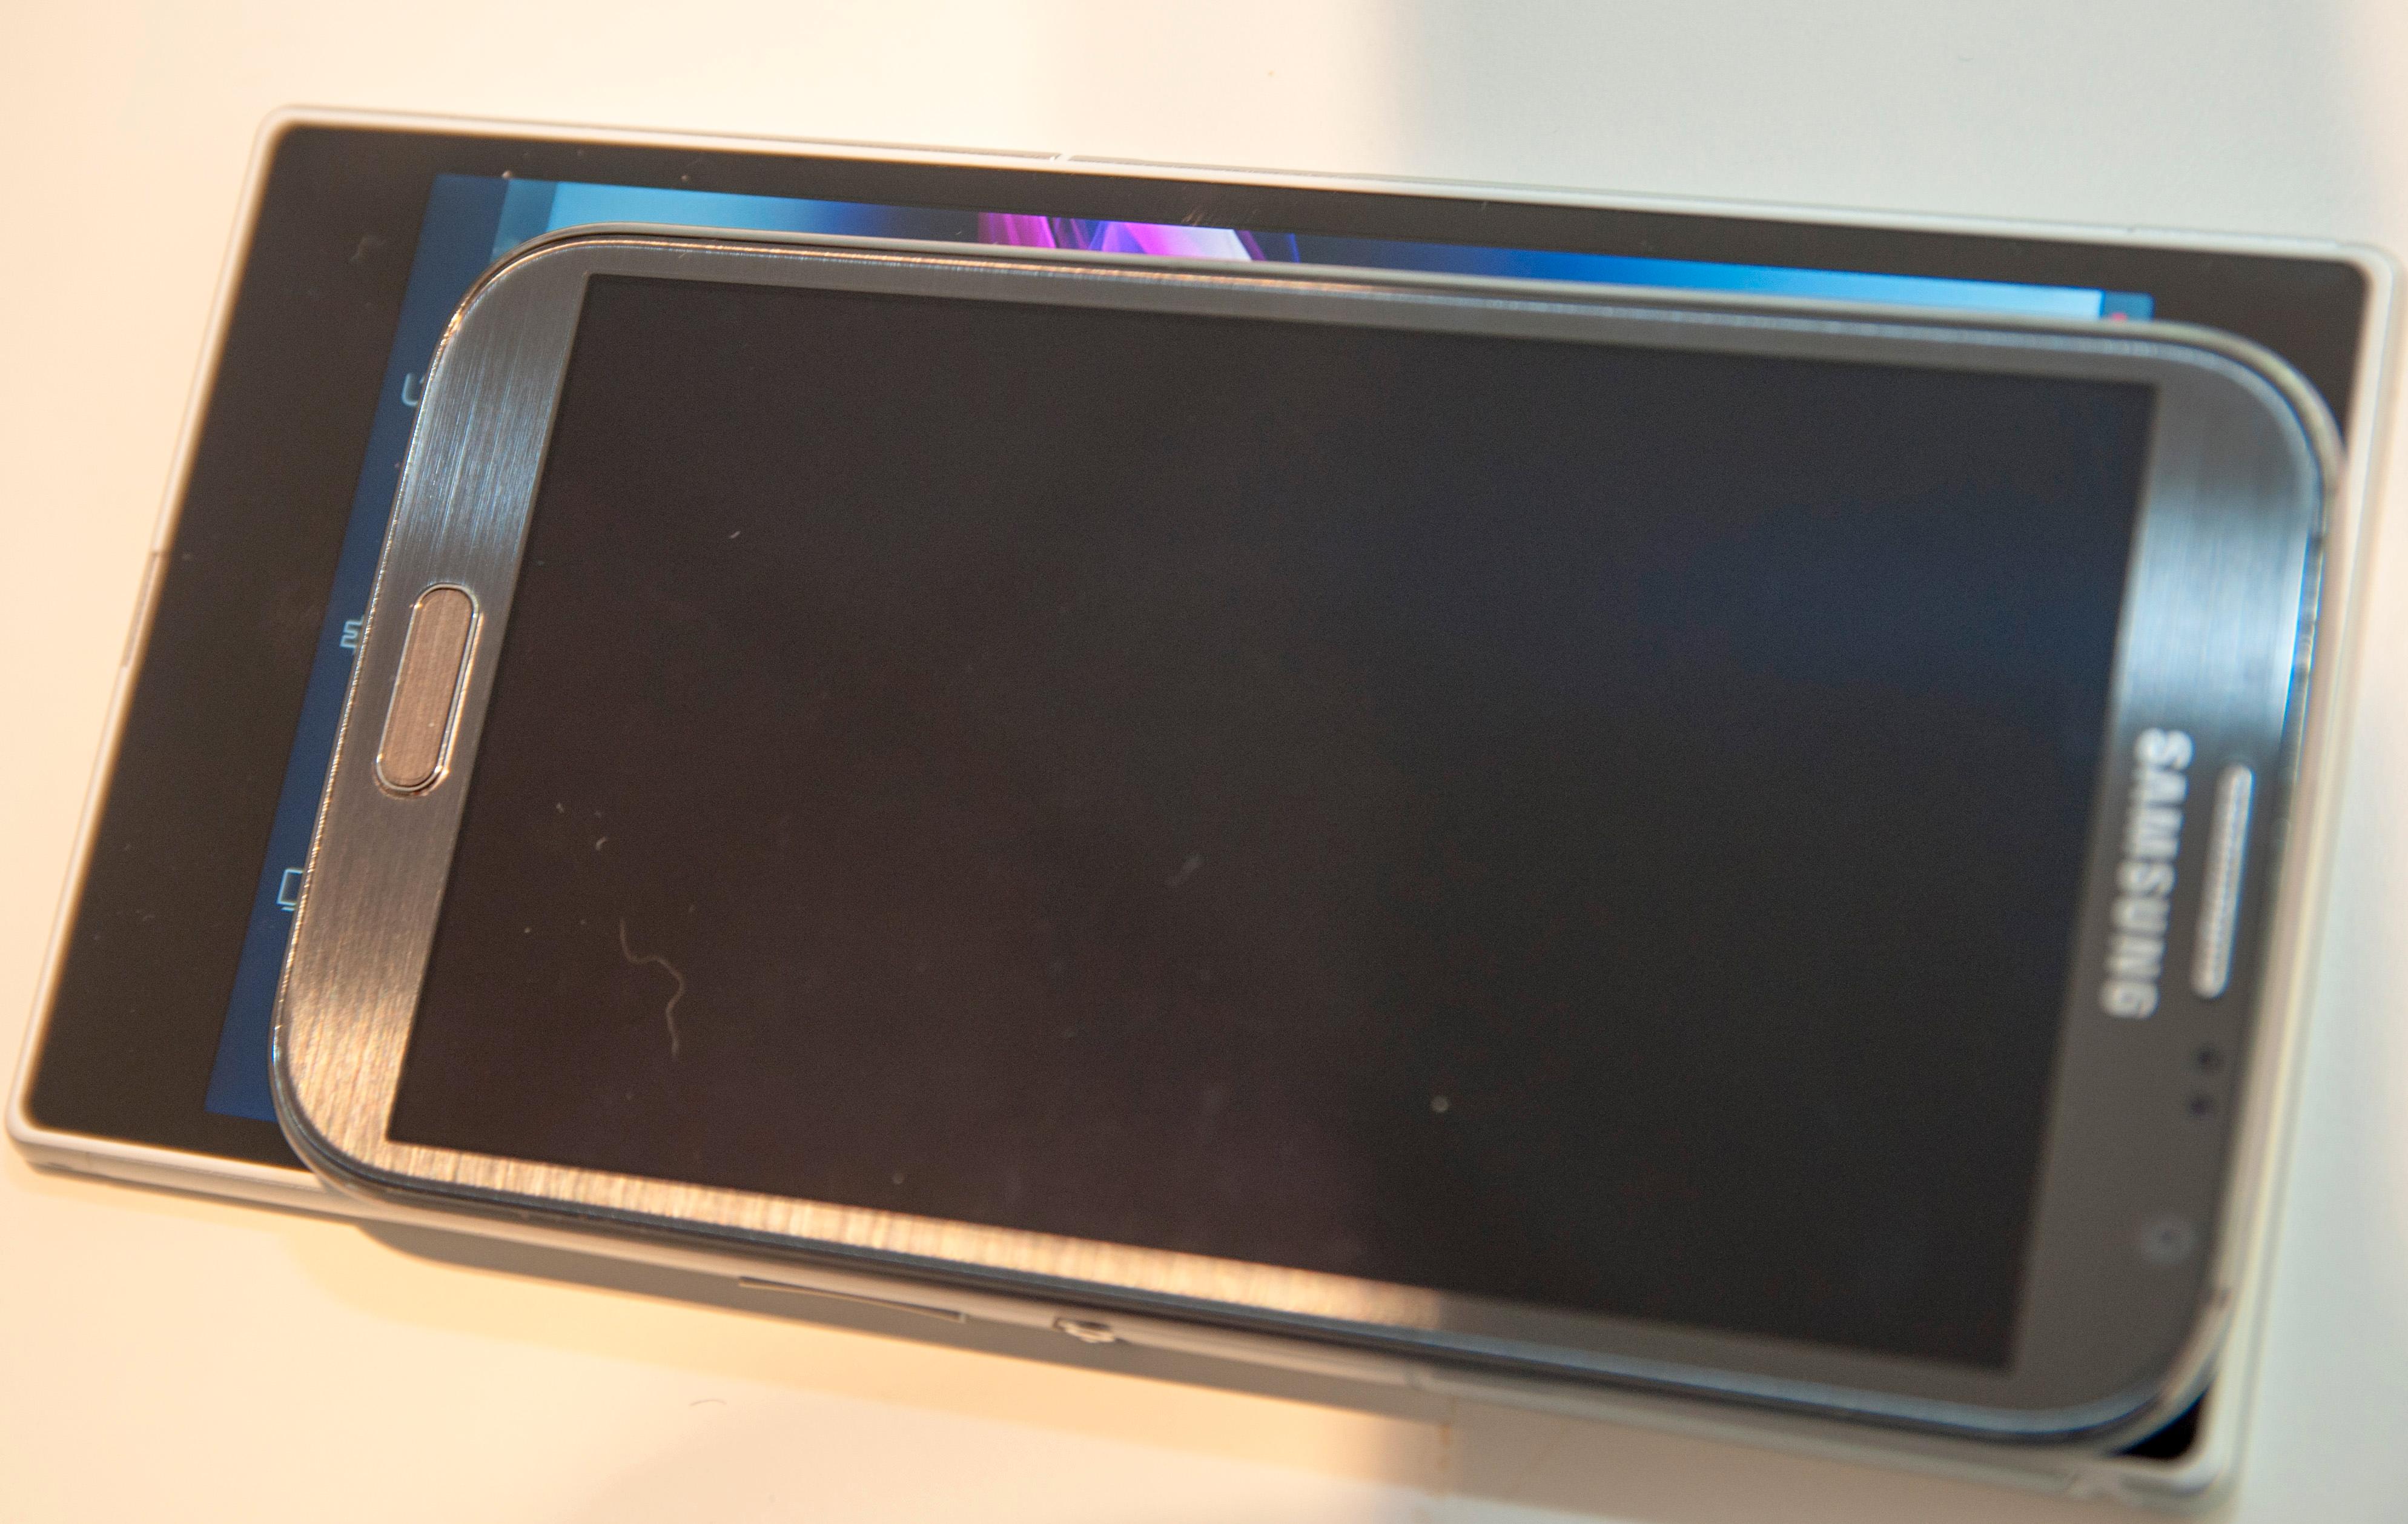 Sonys enorme Xperia Z Ultra får selv Samsung Galaxy Note 2 til å se liten ut.Foto: Finn Jarle Kvalheim, Amobil.no